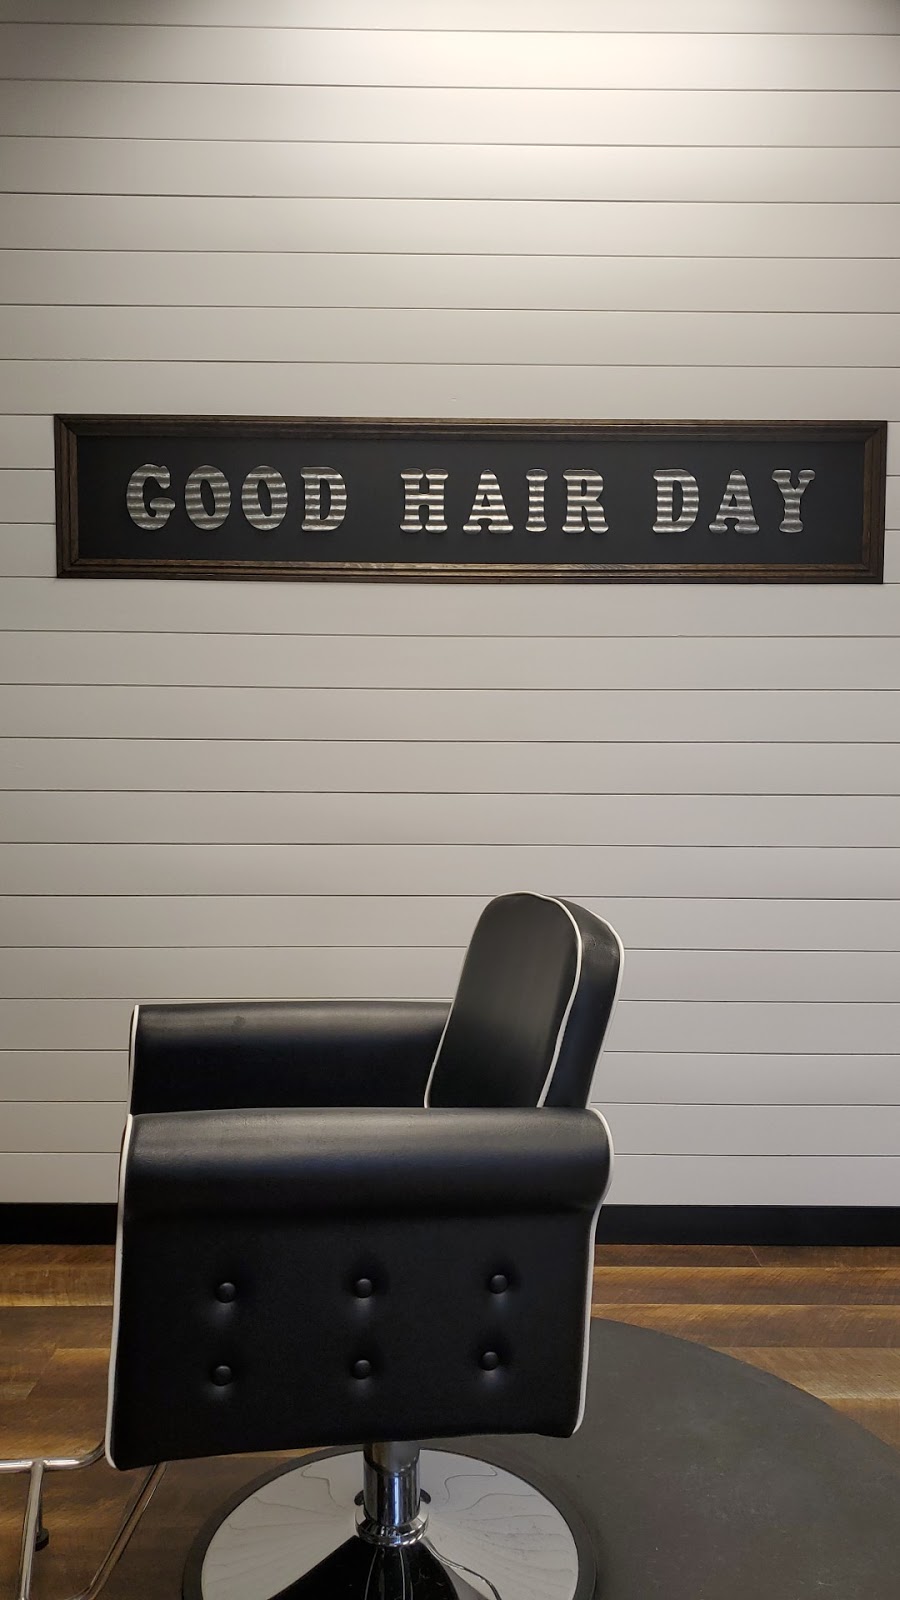 Good hair day | 2 Independence Dr, Marlborough, CT 06447 | Phone: (860) 467-6942